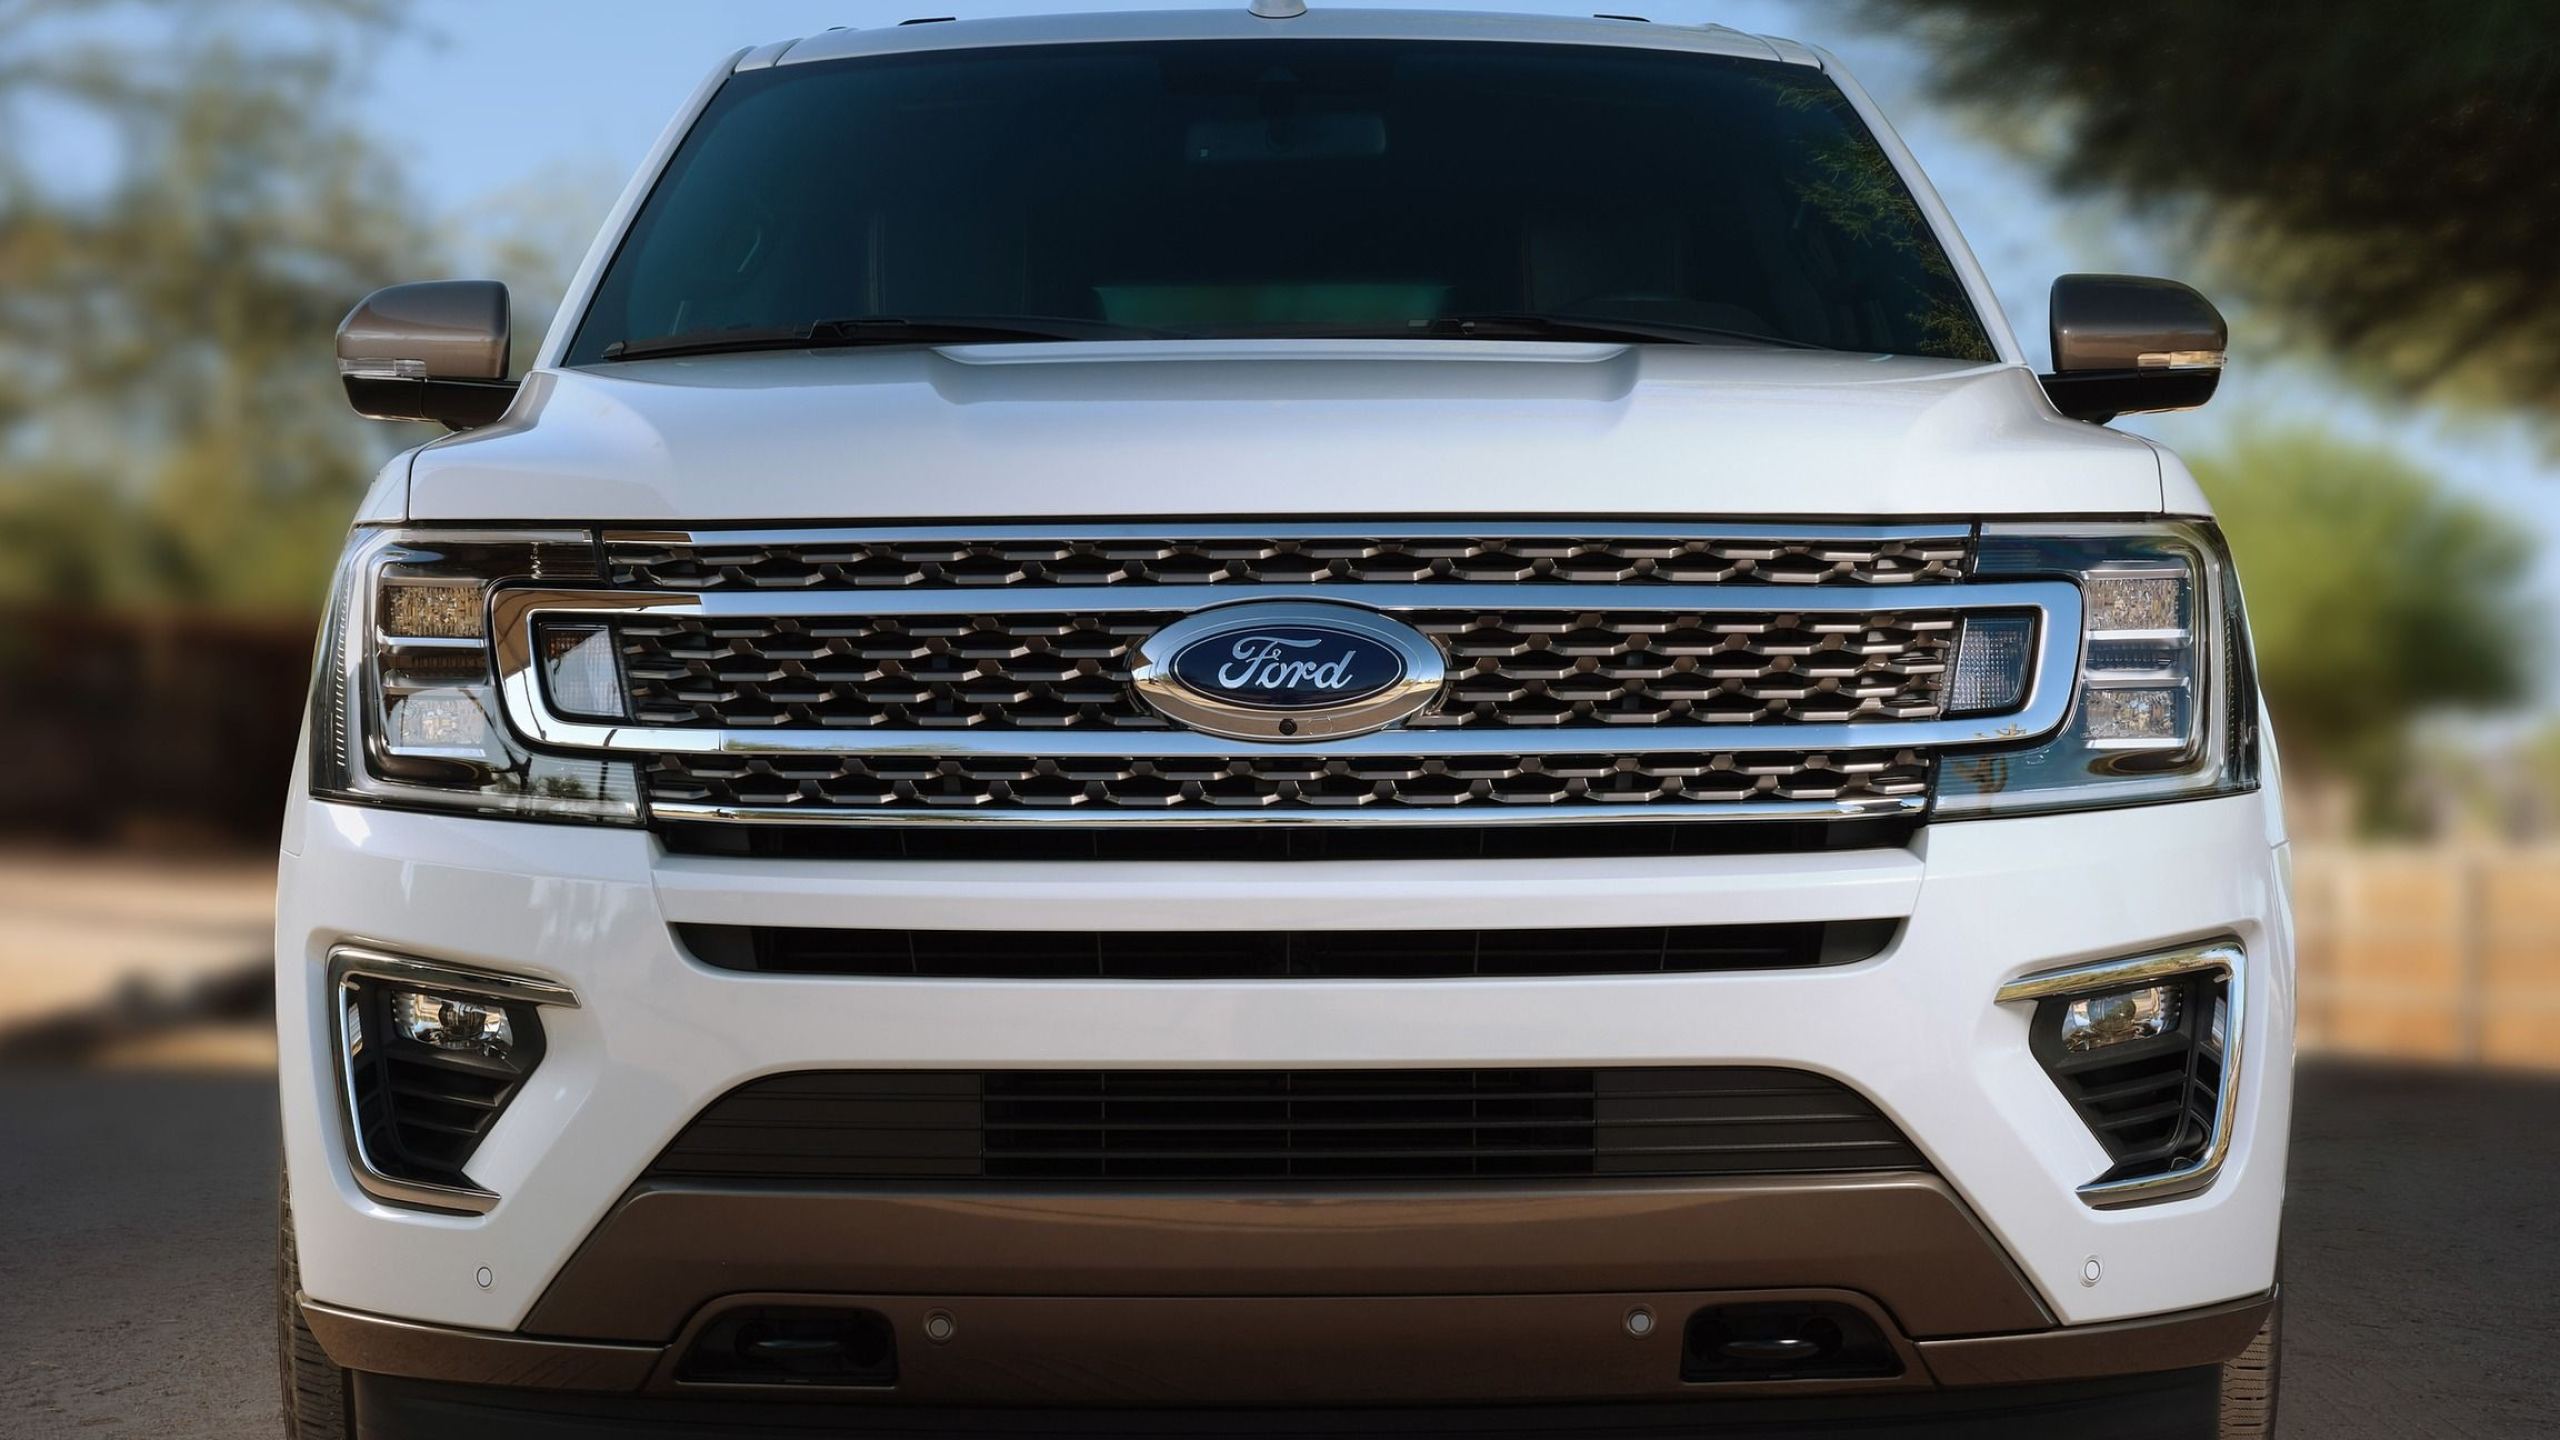 Ford Expedition, Explore the adventure, SUV power, Impressive design, 2560x1440 HD Desktop